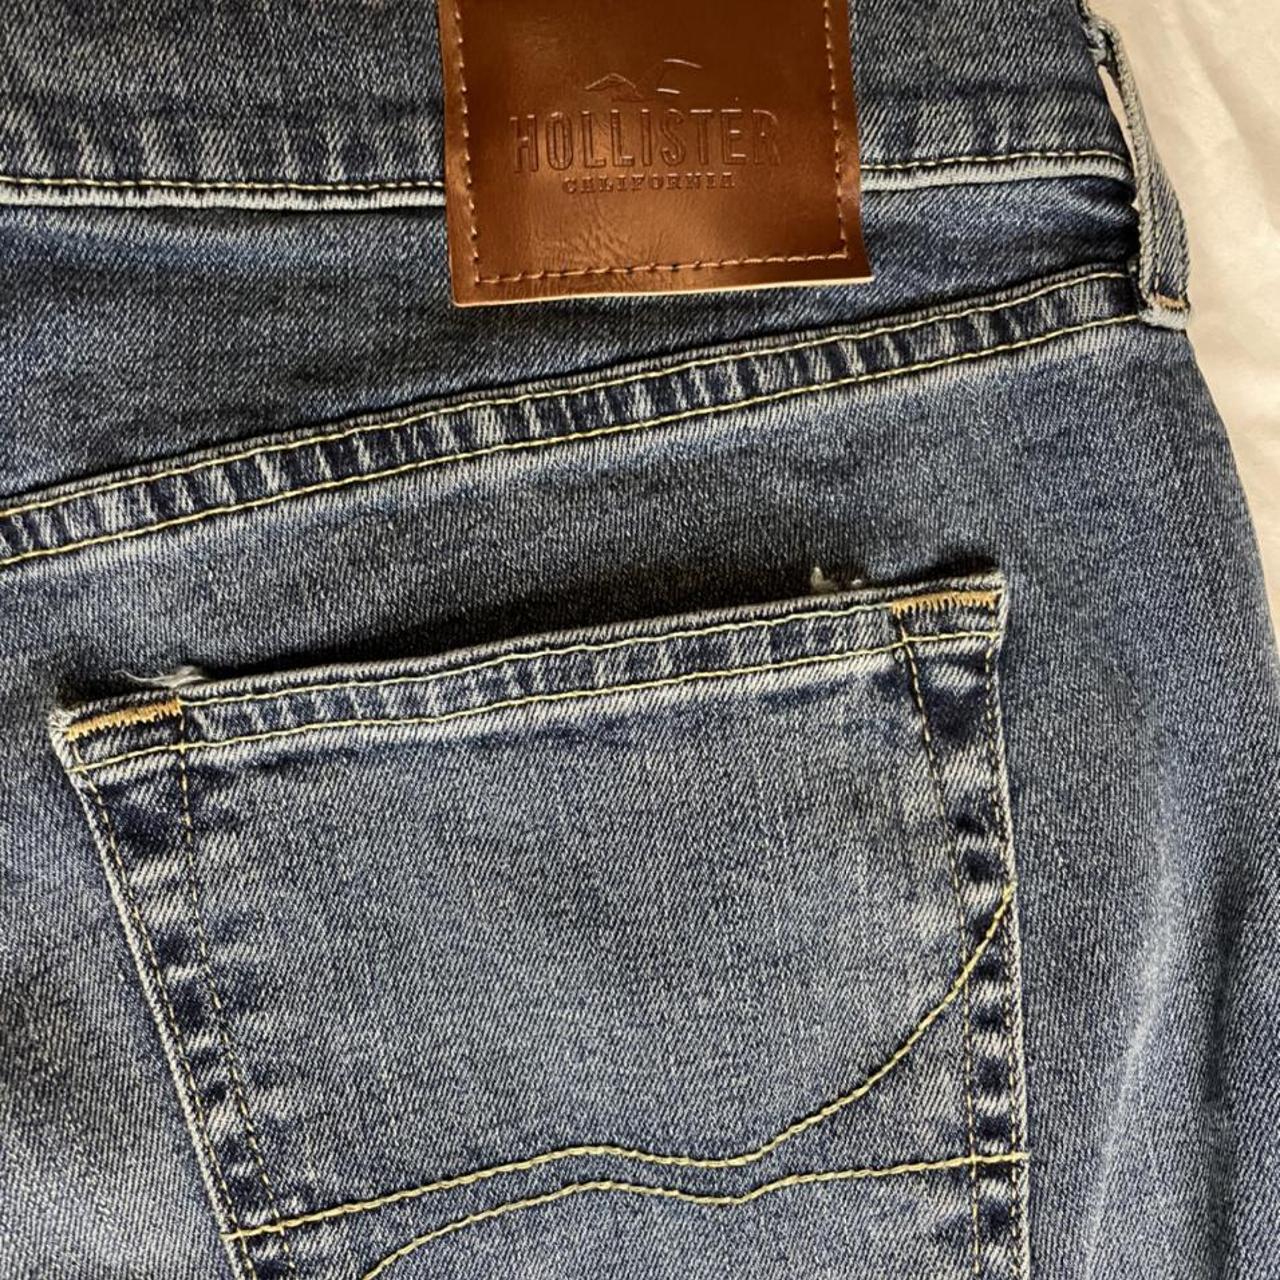 #Hollister #Jeans Epic flex slim straight - Depop